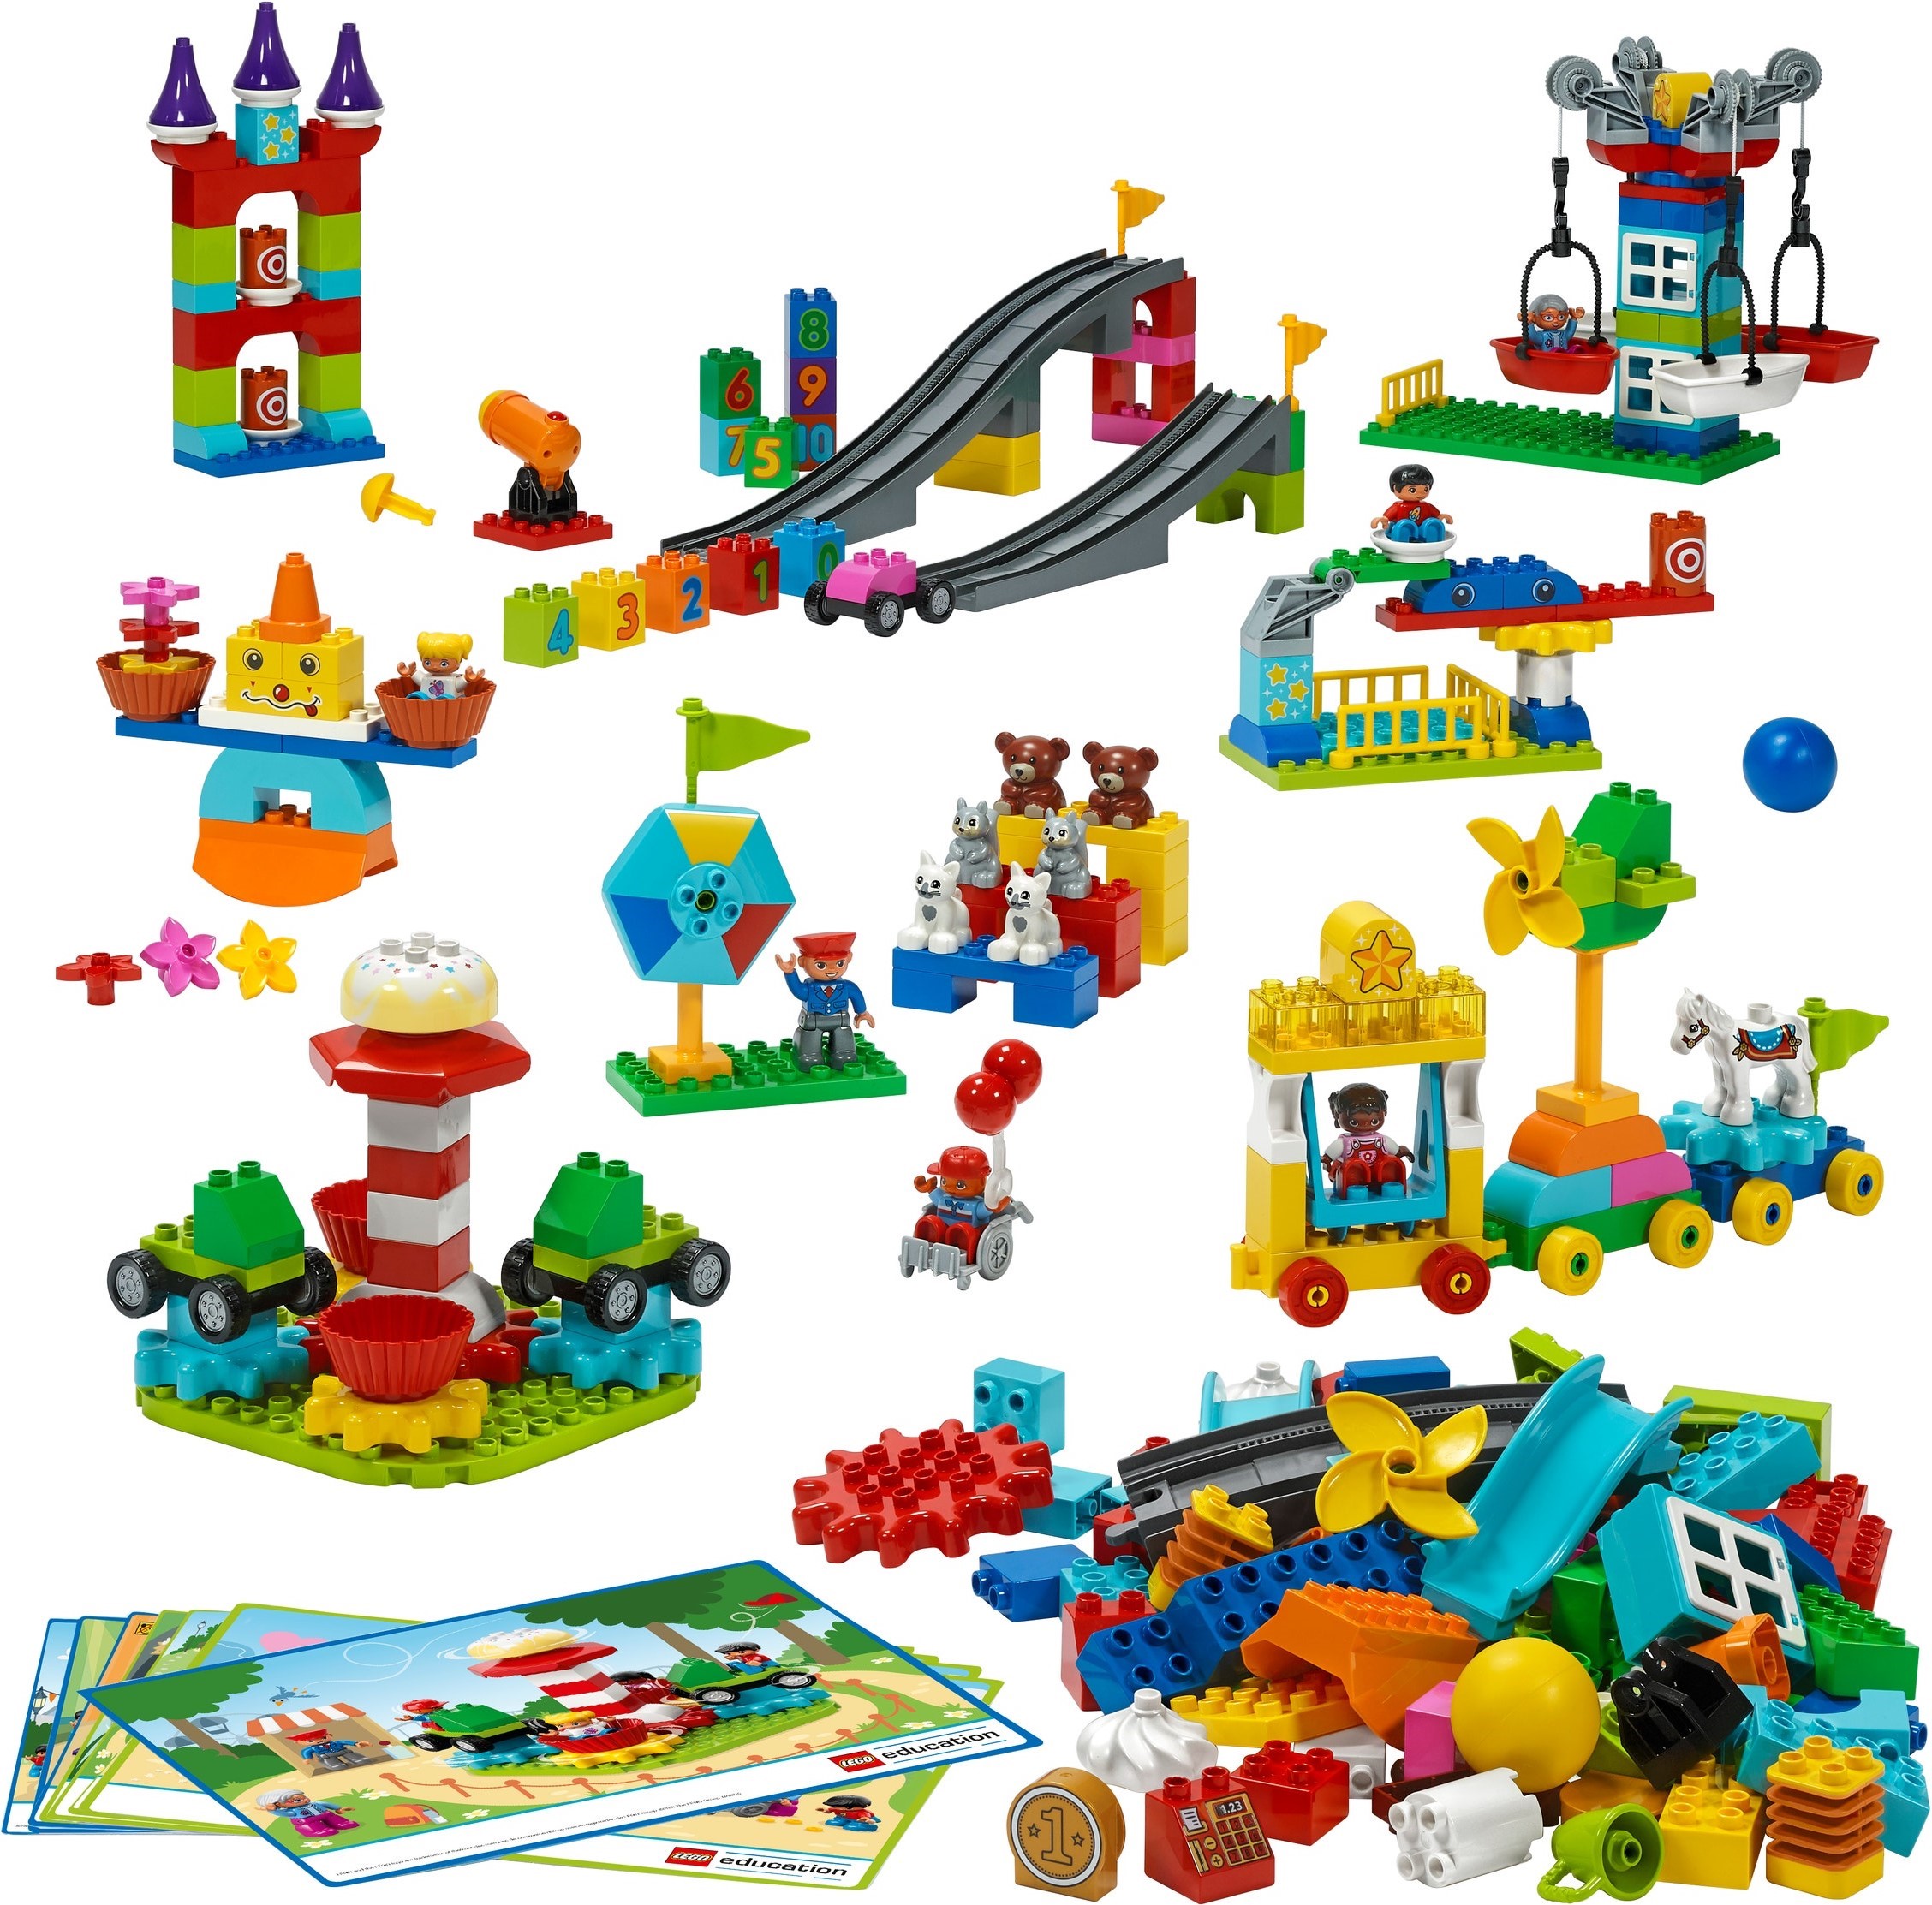 Lego Medium Storage - 45498 - Set of 8